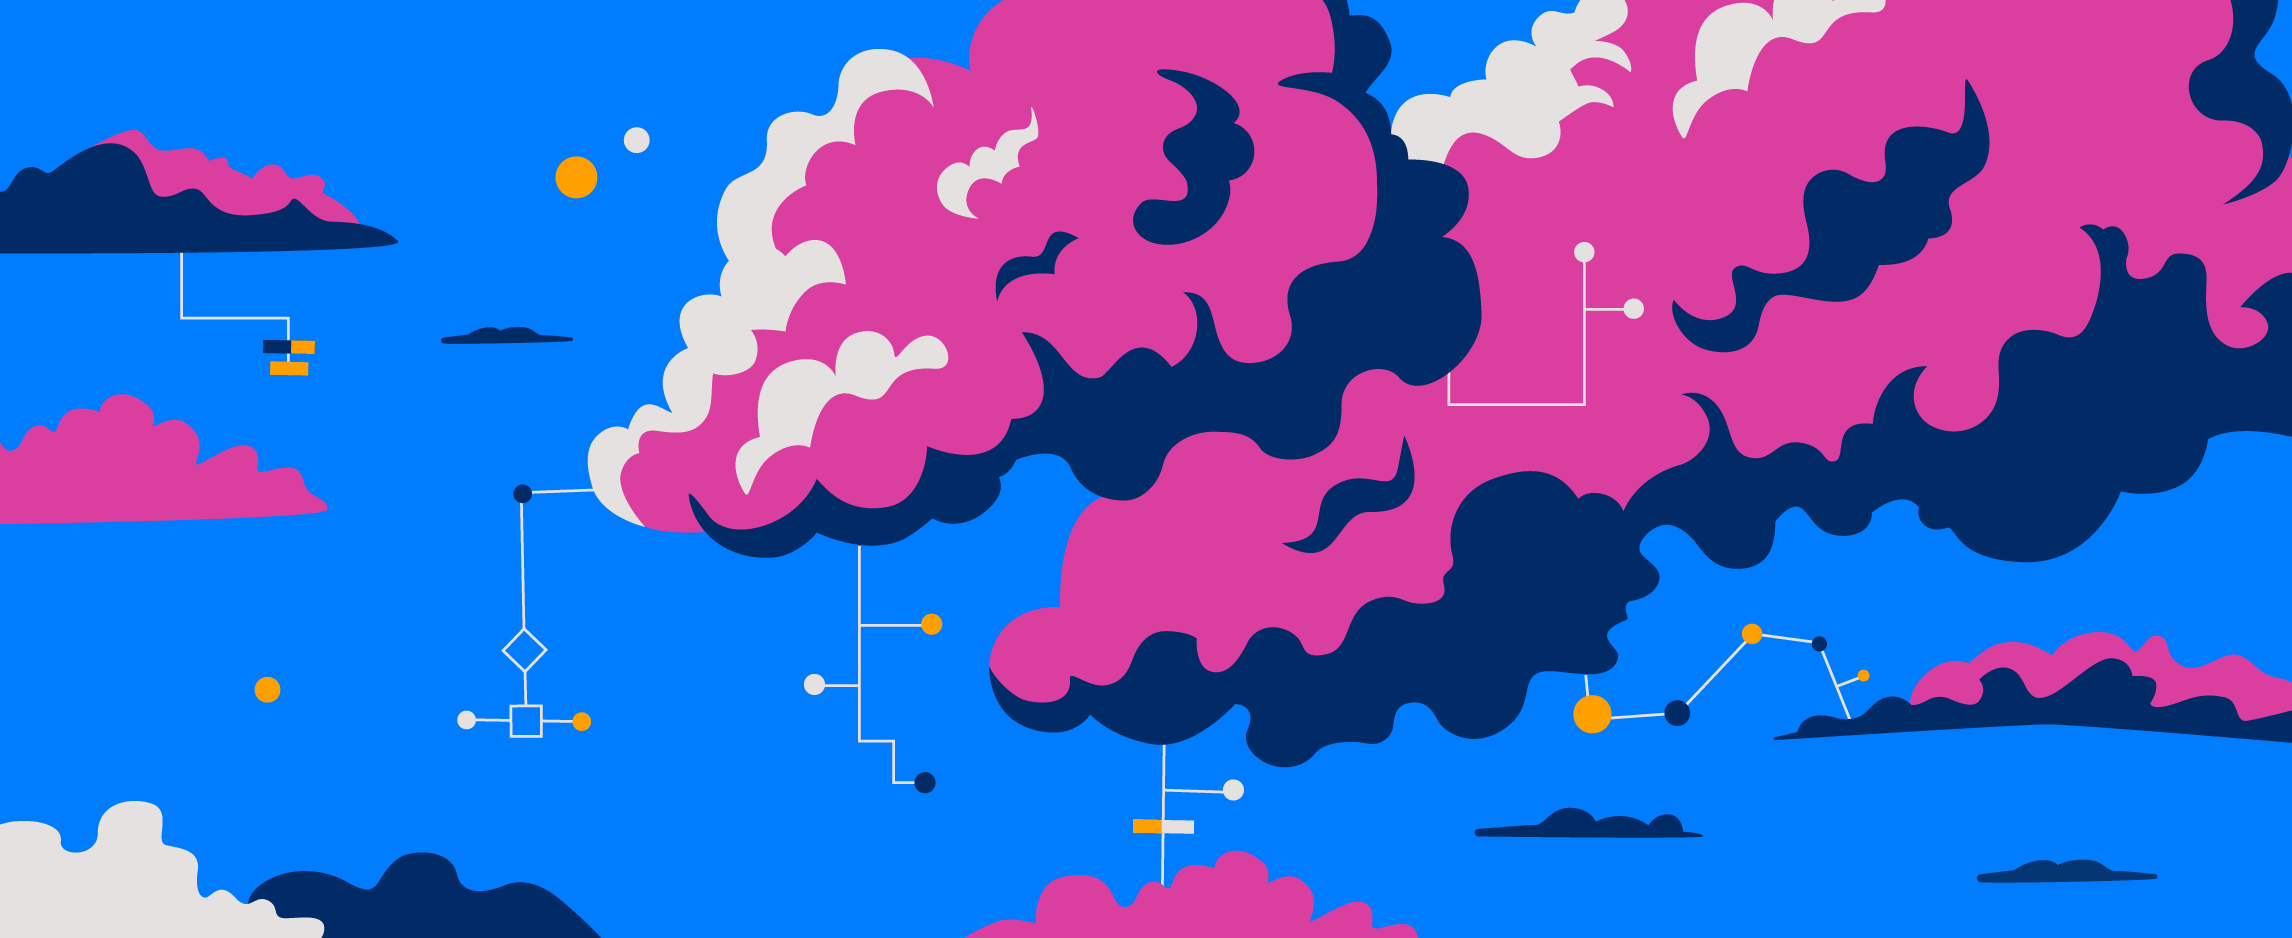 An illustration depicting cloud storage